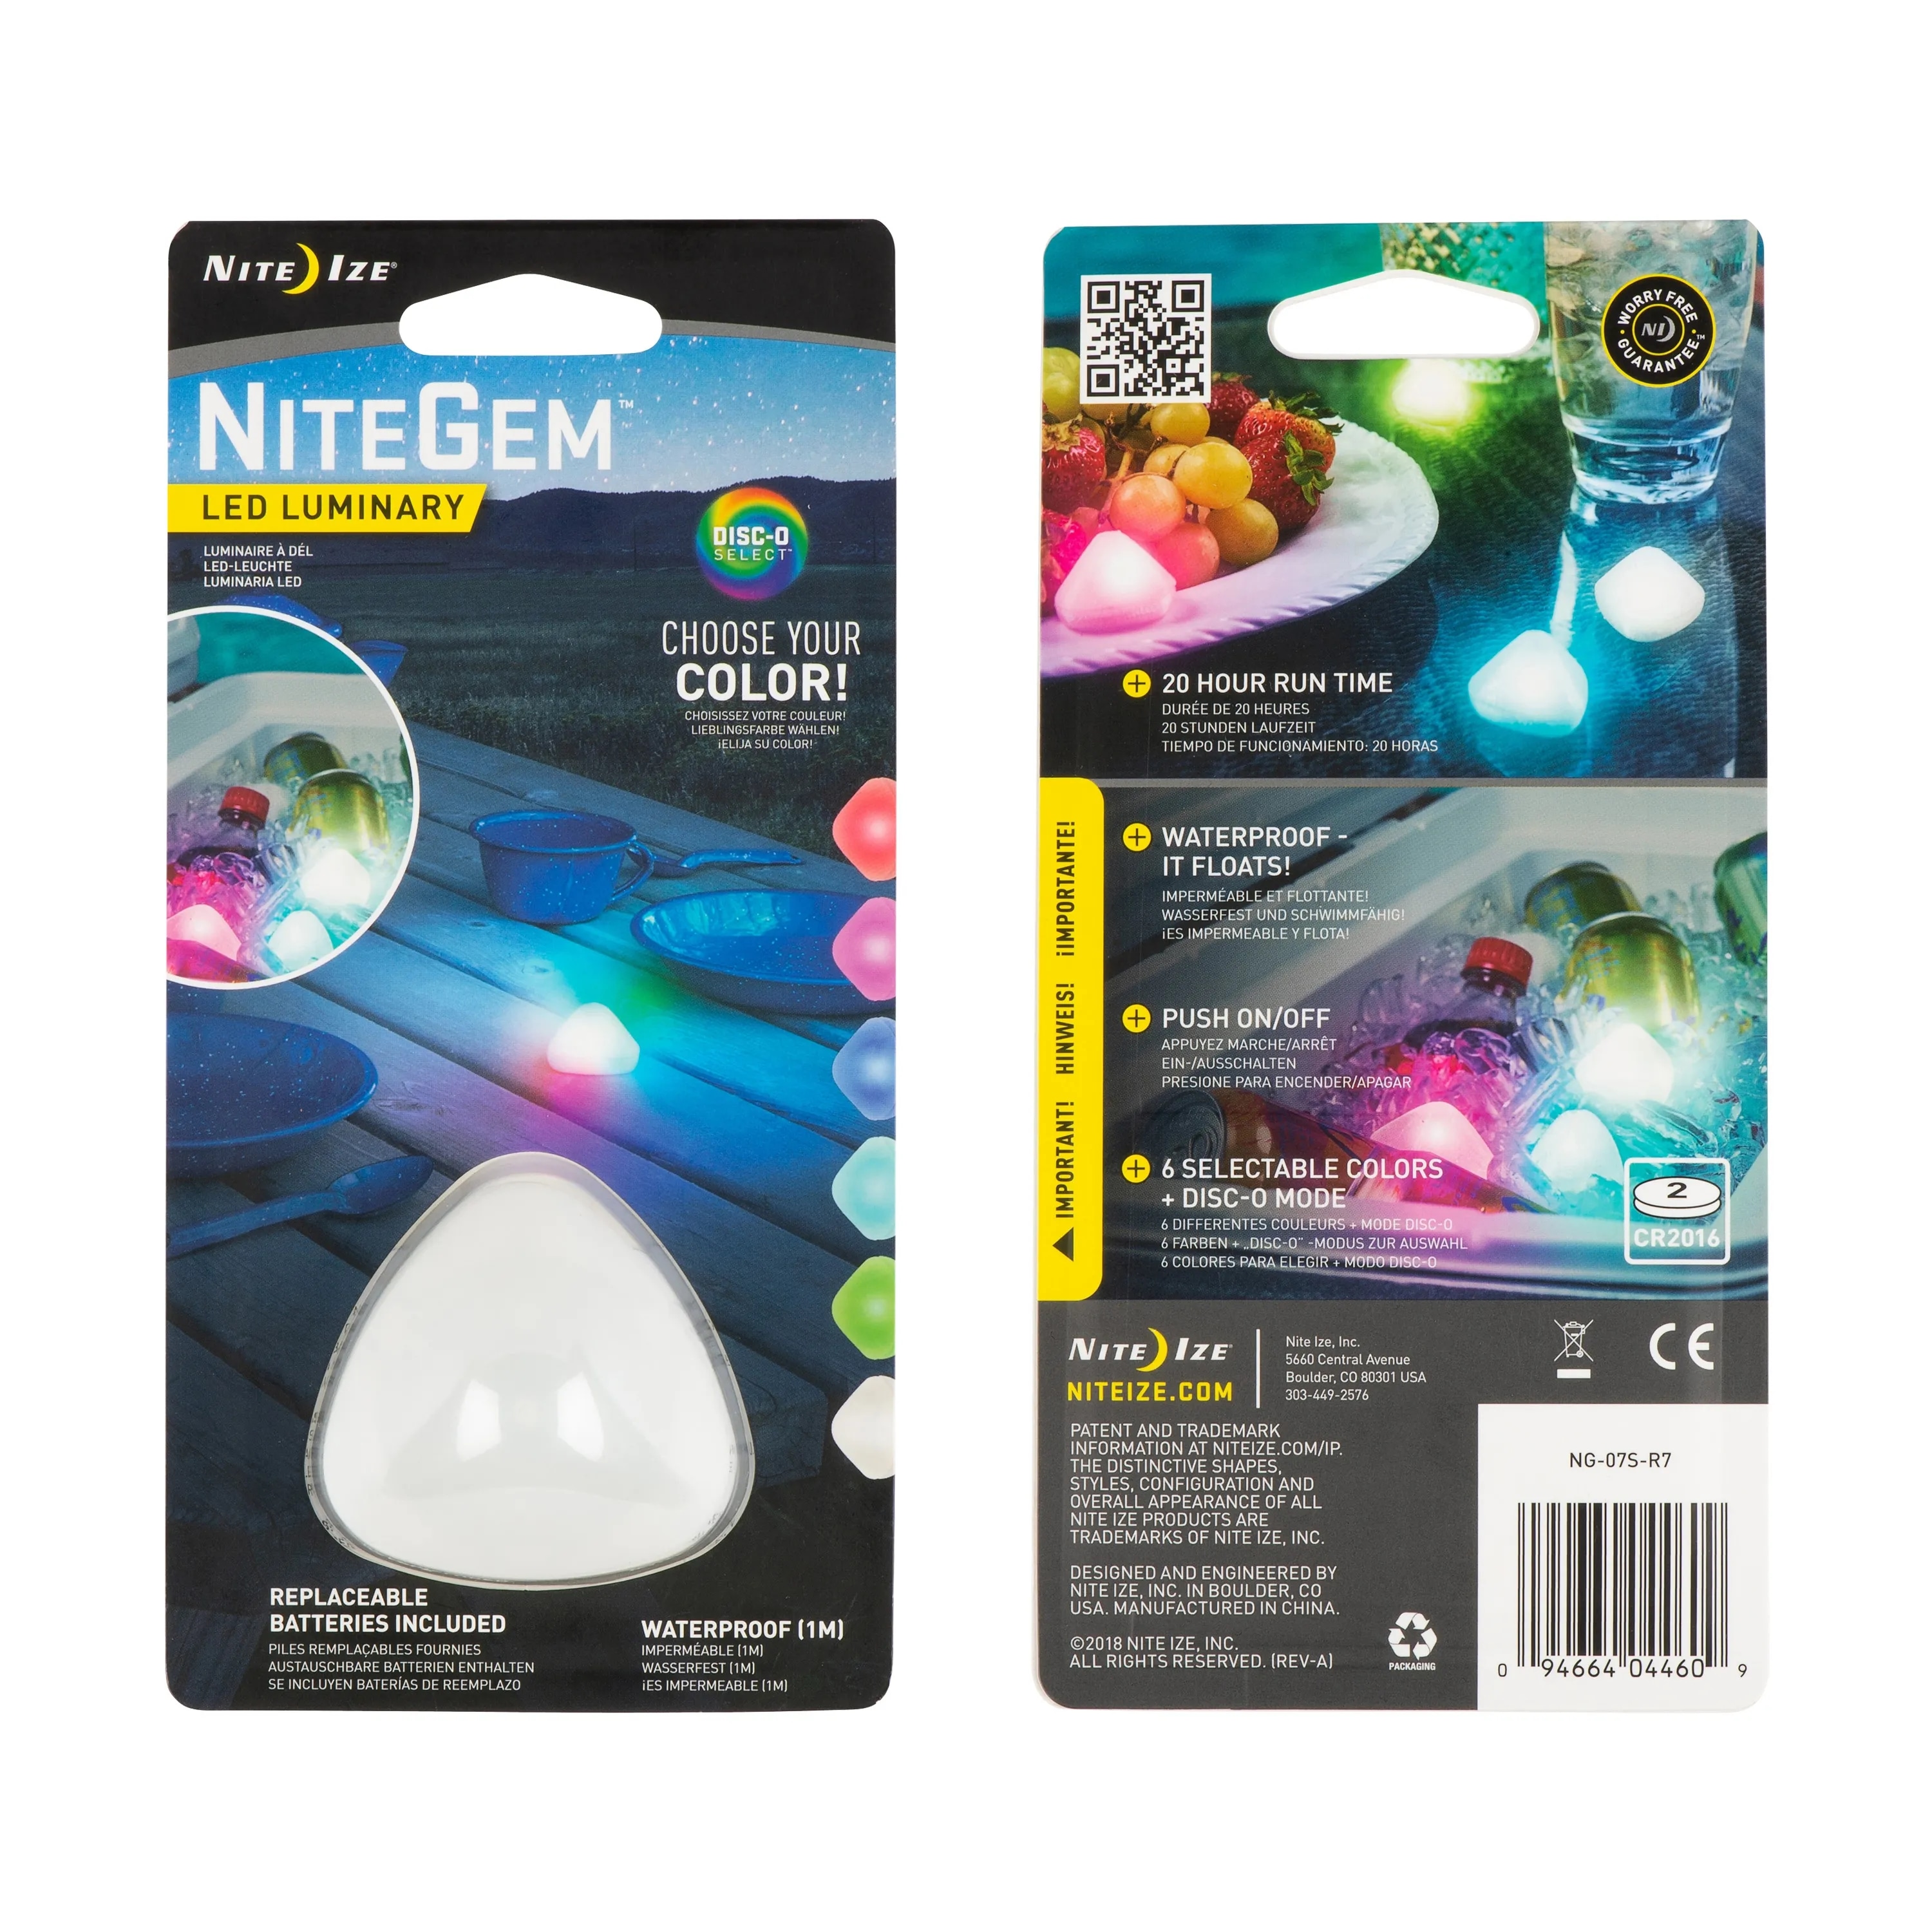 NiteGem LED Luminary Disc-O Select